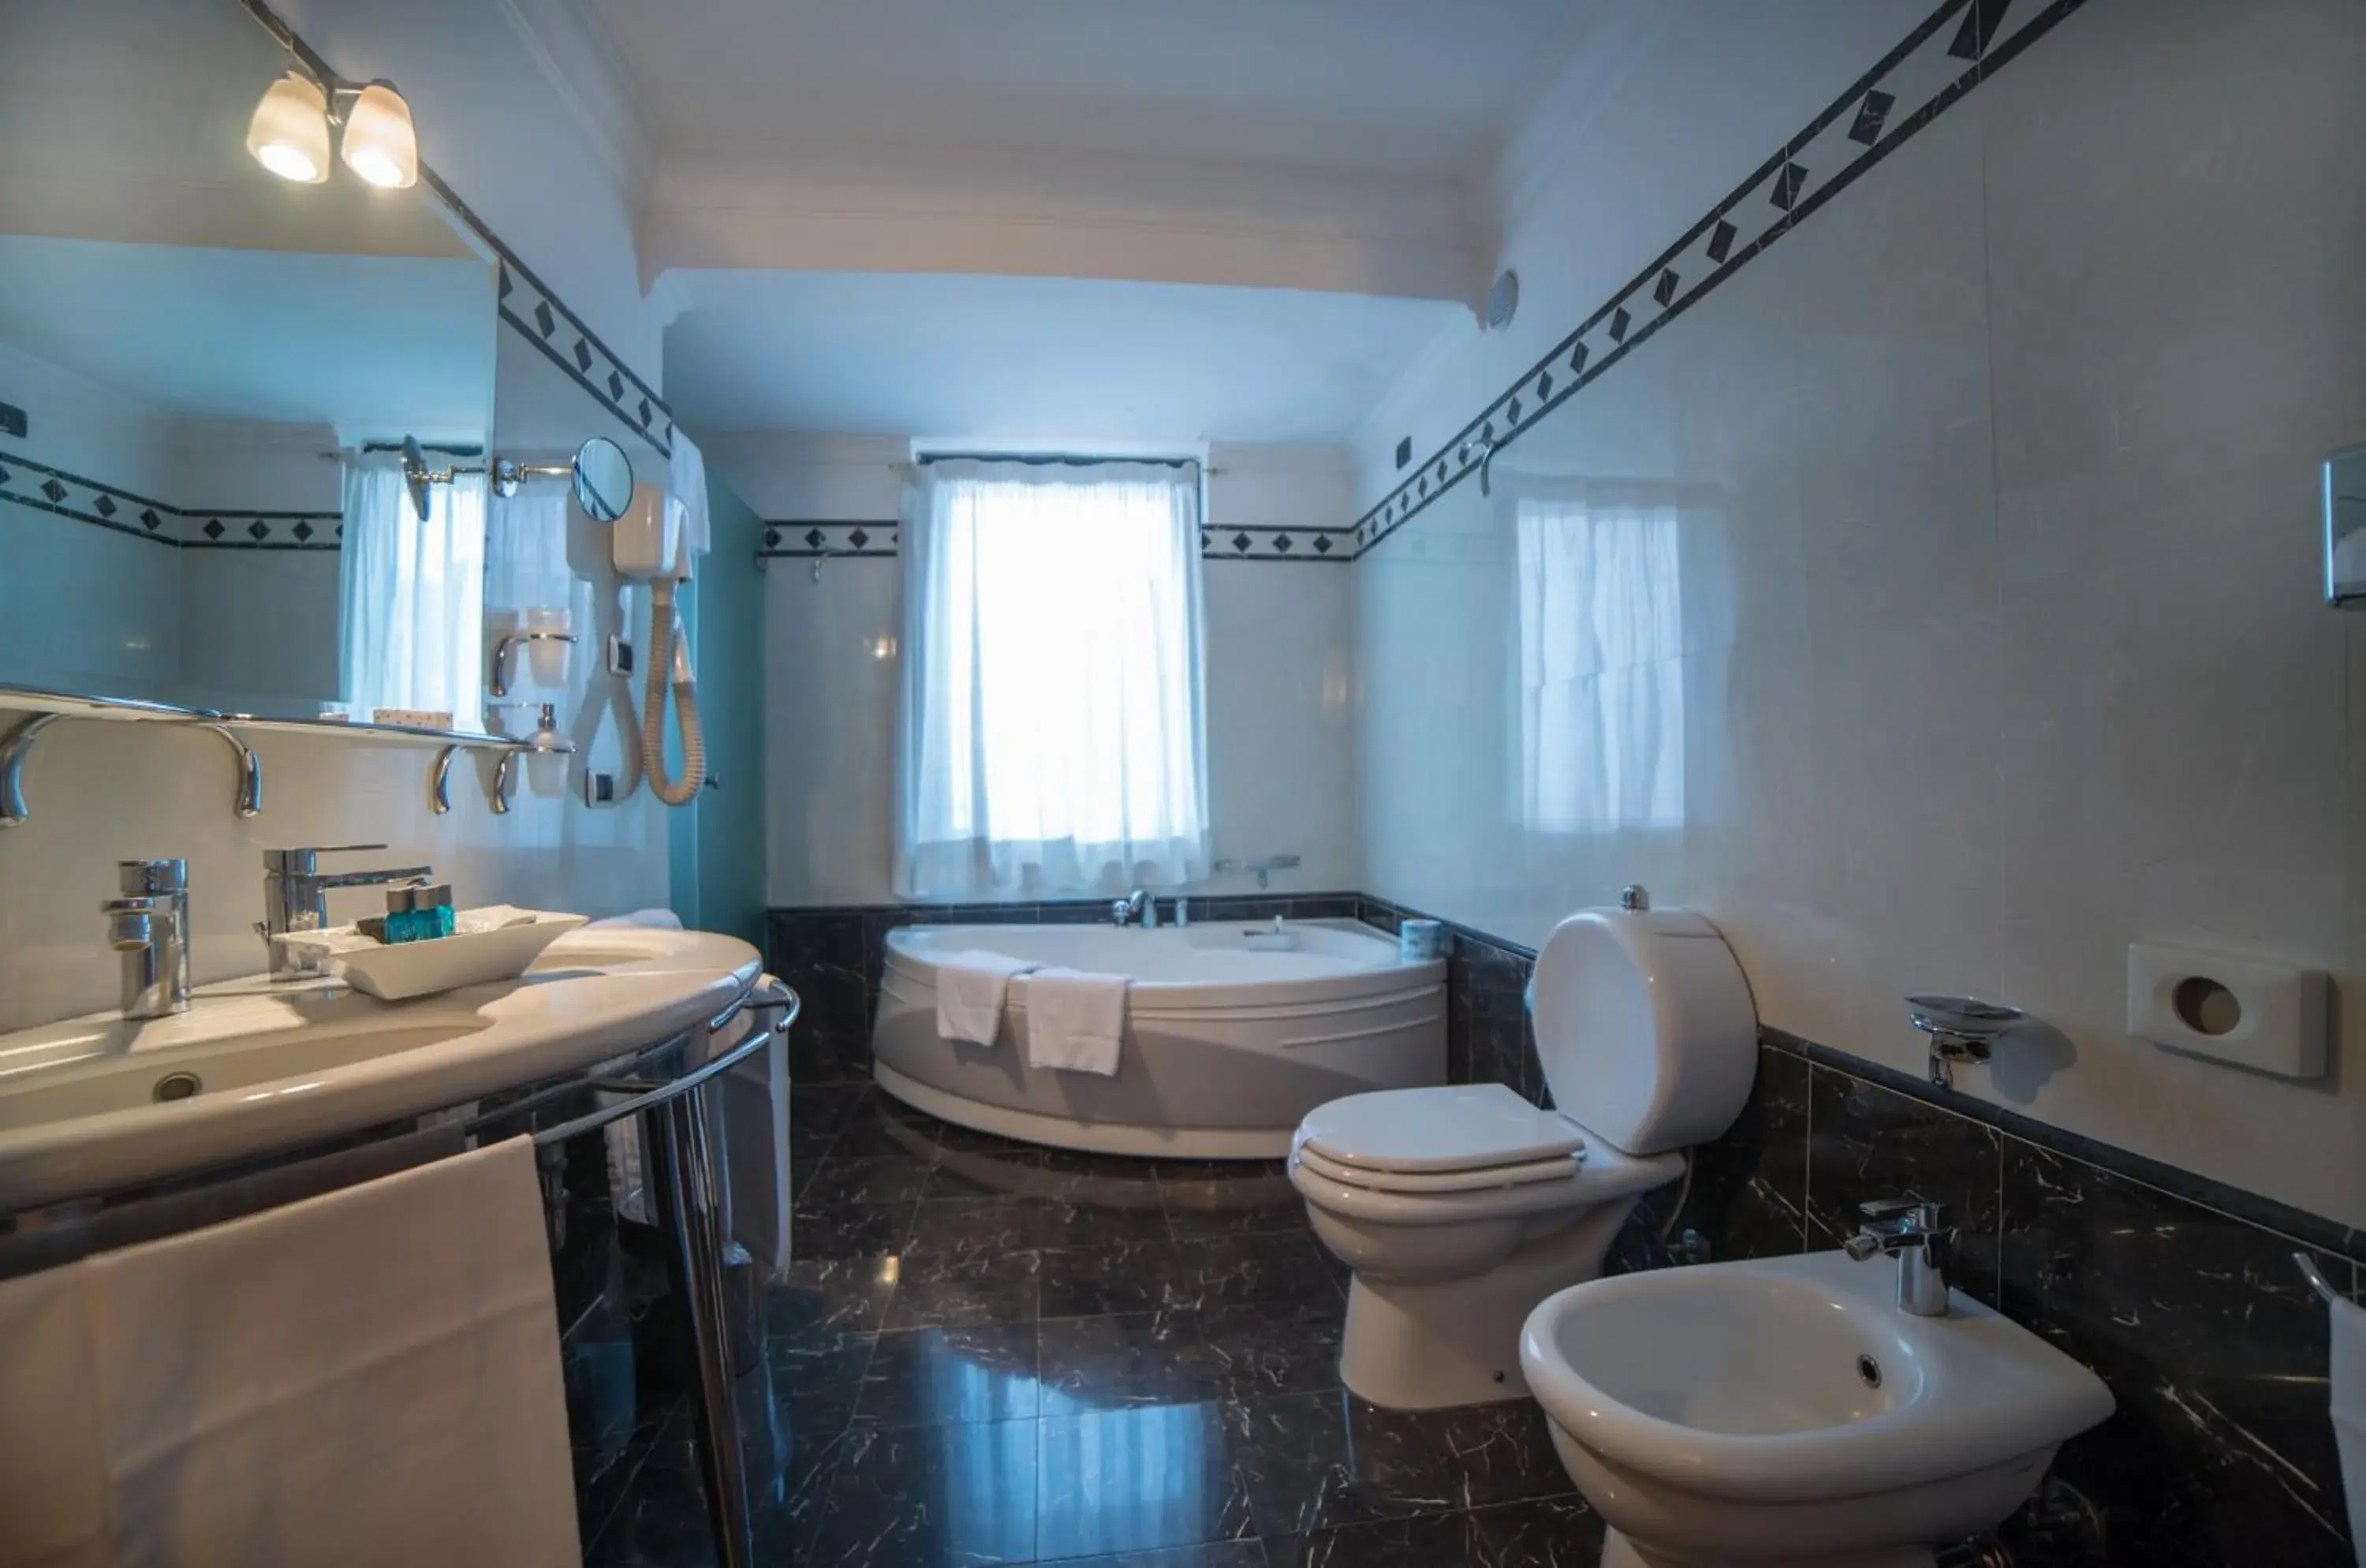 Area and facilities, Bathroom in Hotel Nettuno